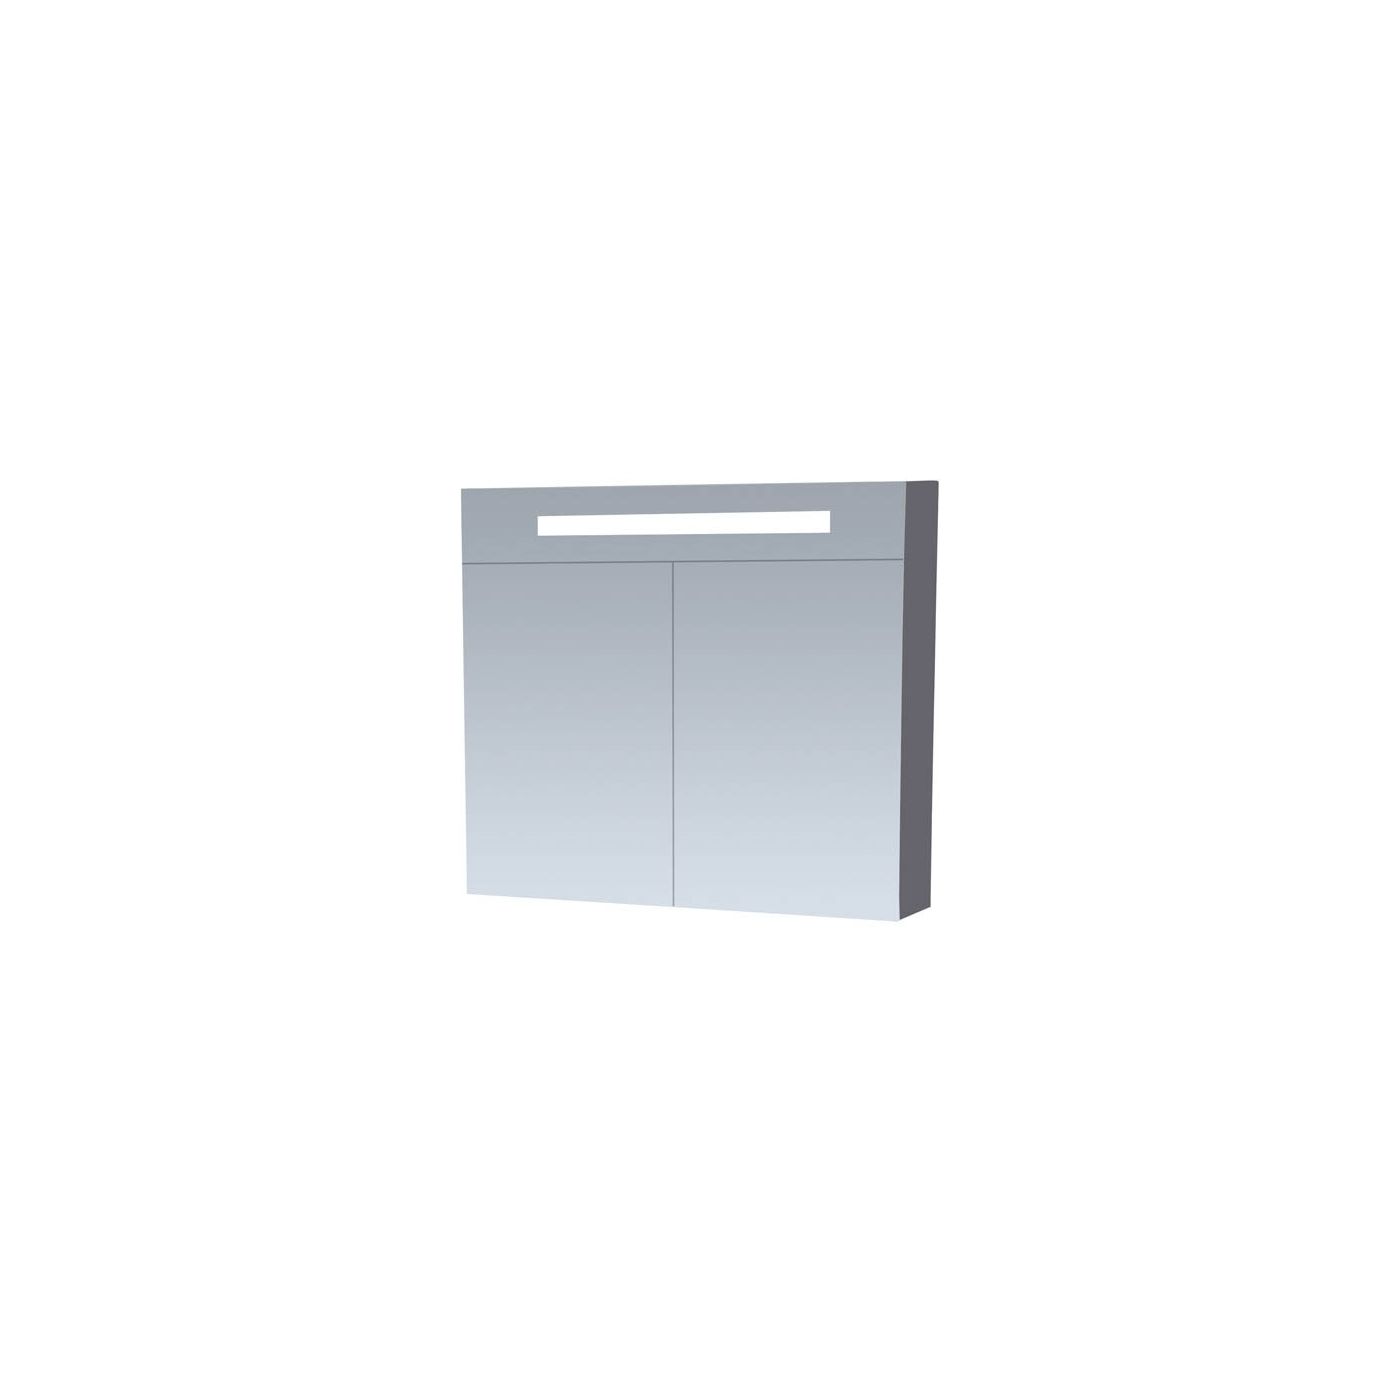 Tapo New Future spiegelkast Grijs 80cm dubbelzijdige spiegels, verlichting, & stopcontact